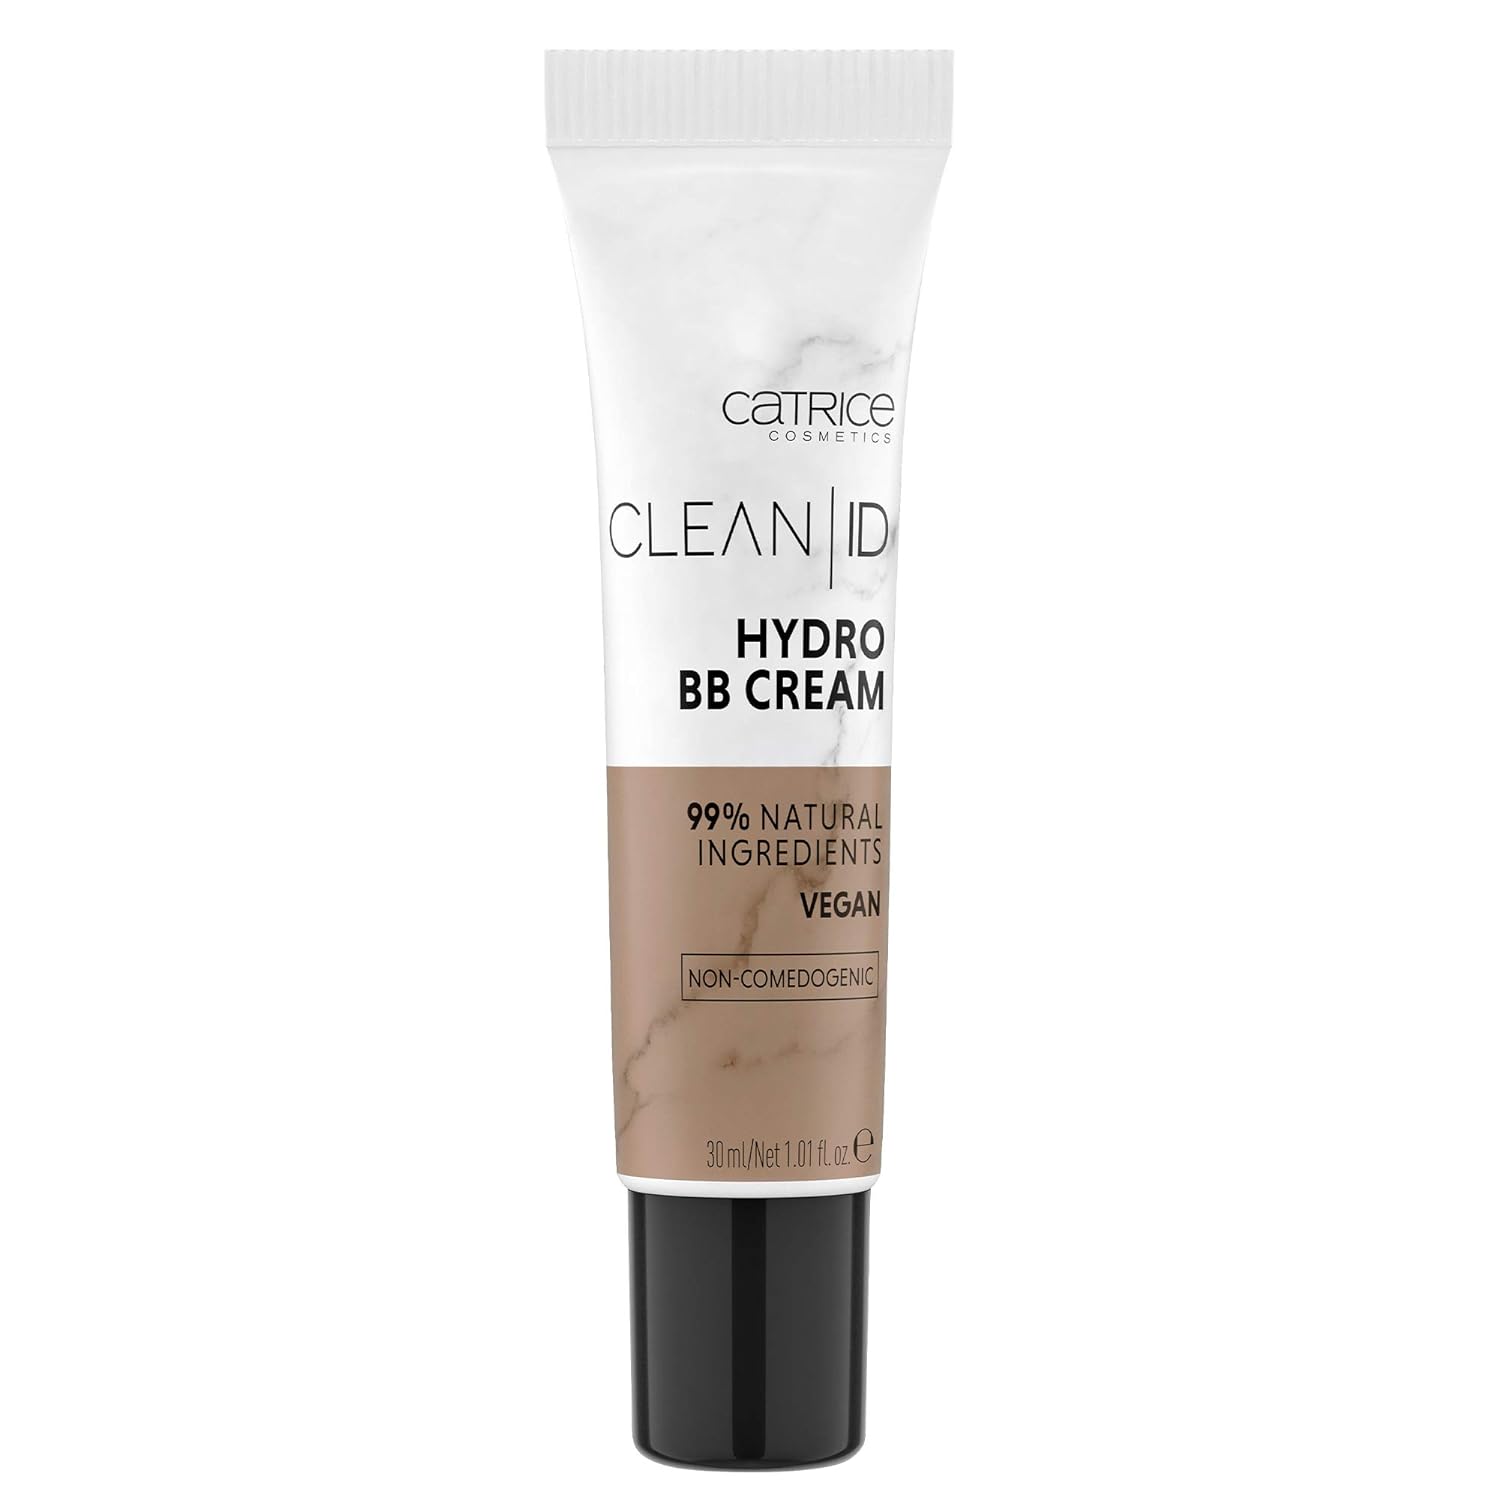  Catrice Clean ID Hydro BB Cream (015 | Light Warm)